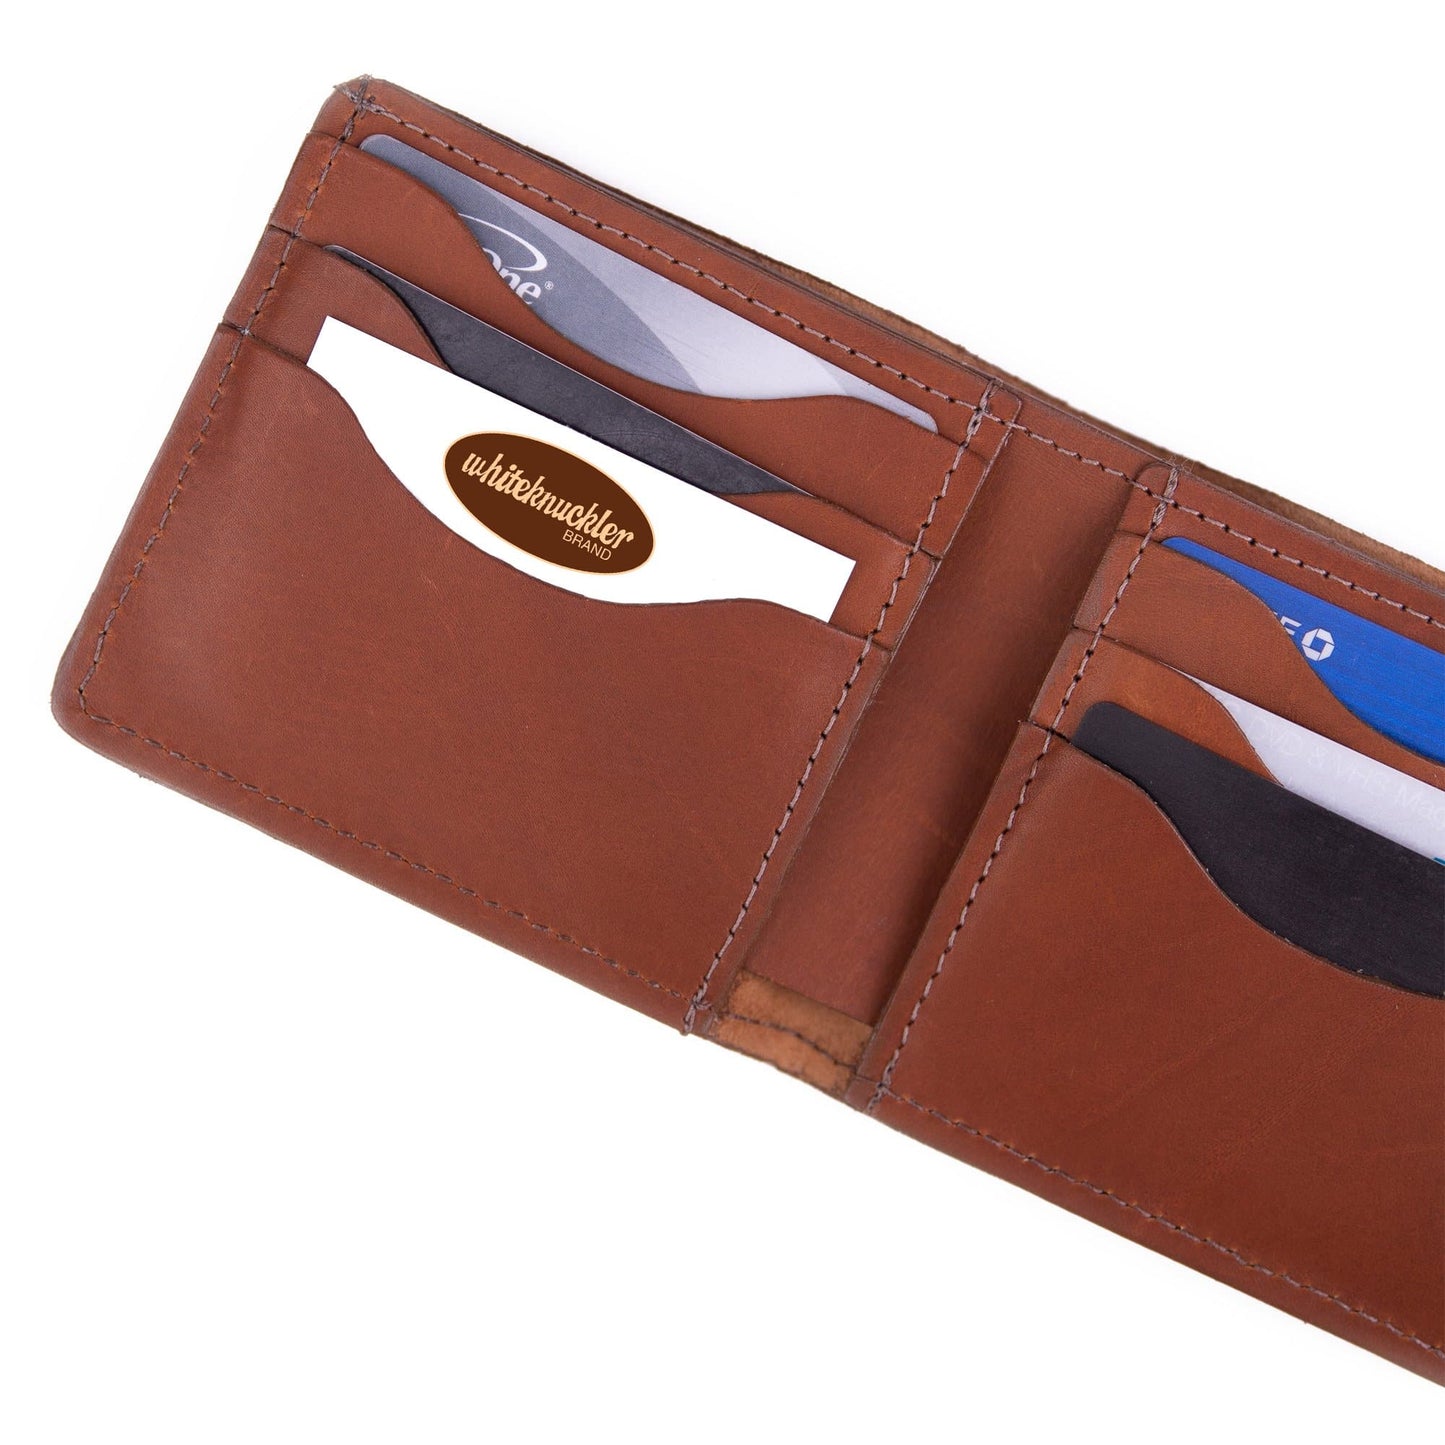 Wallet - Classic Bifold